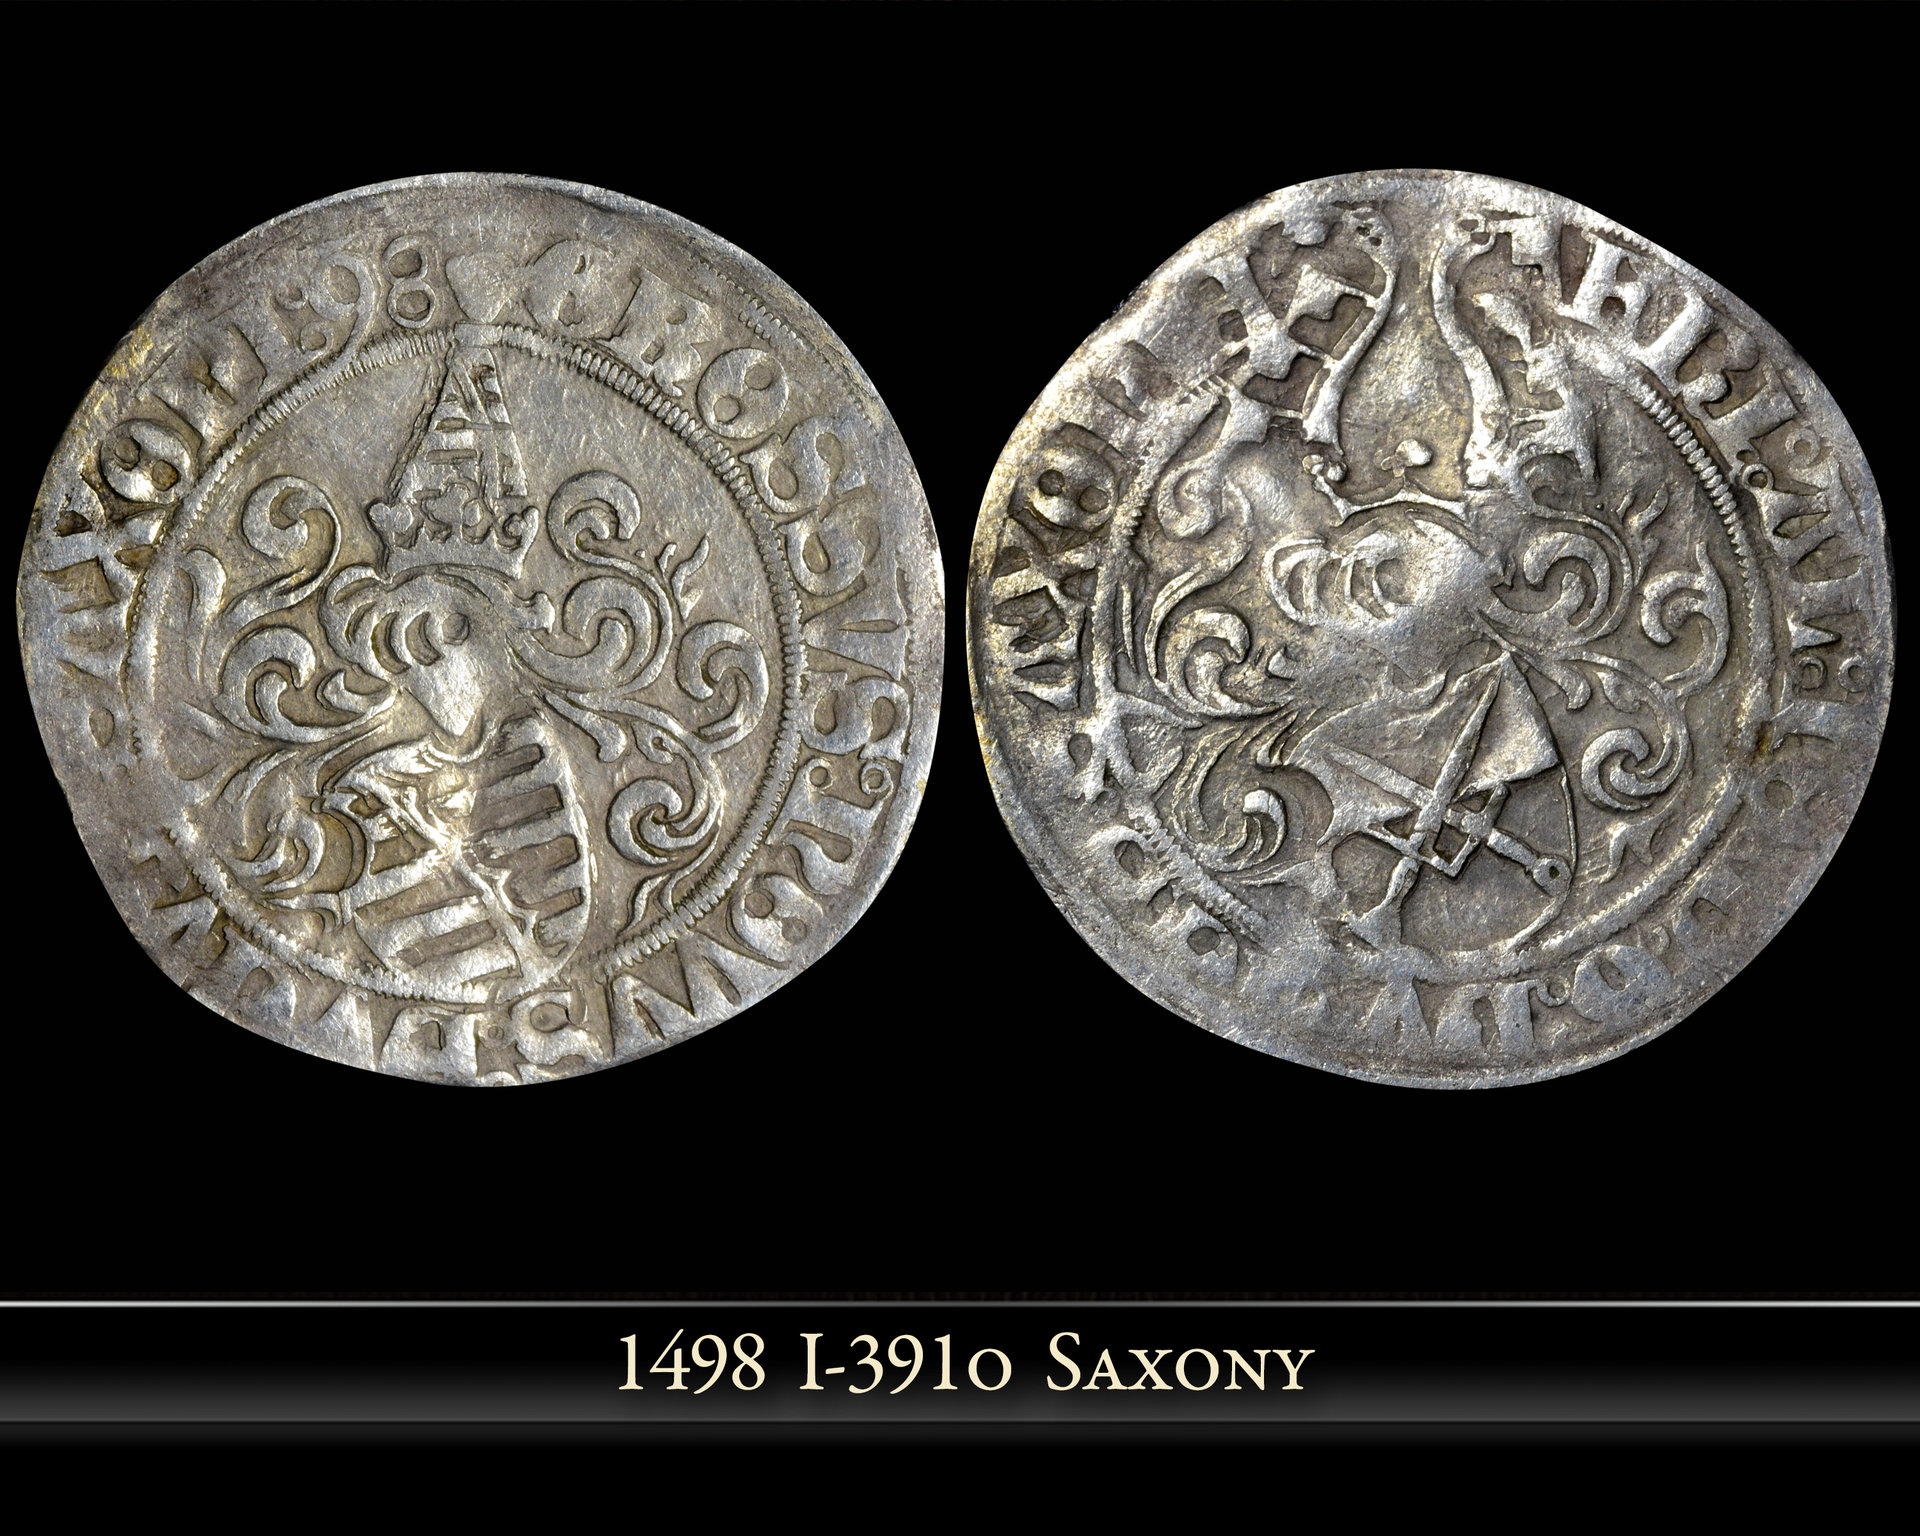 1498 - 1 - 3910 - Saxony copy.jpg